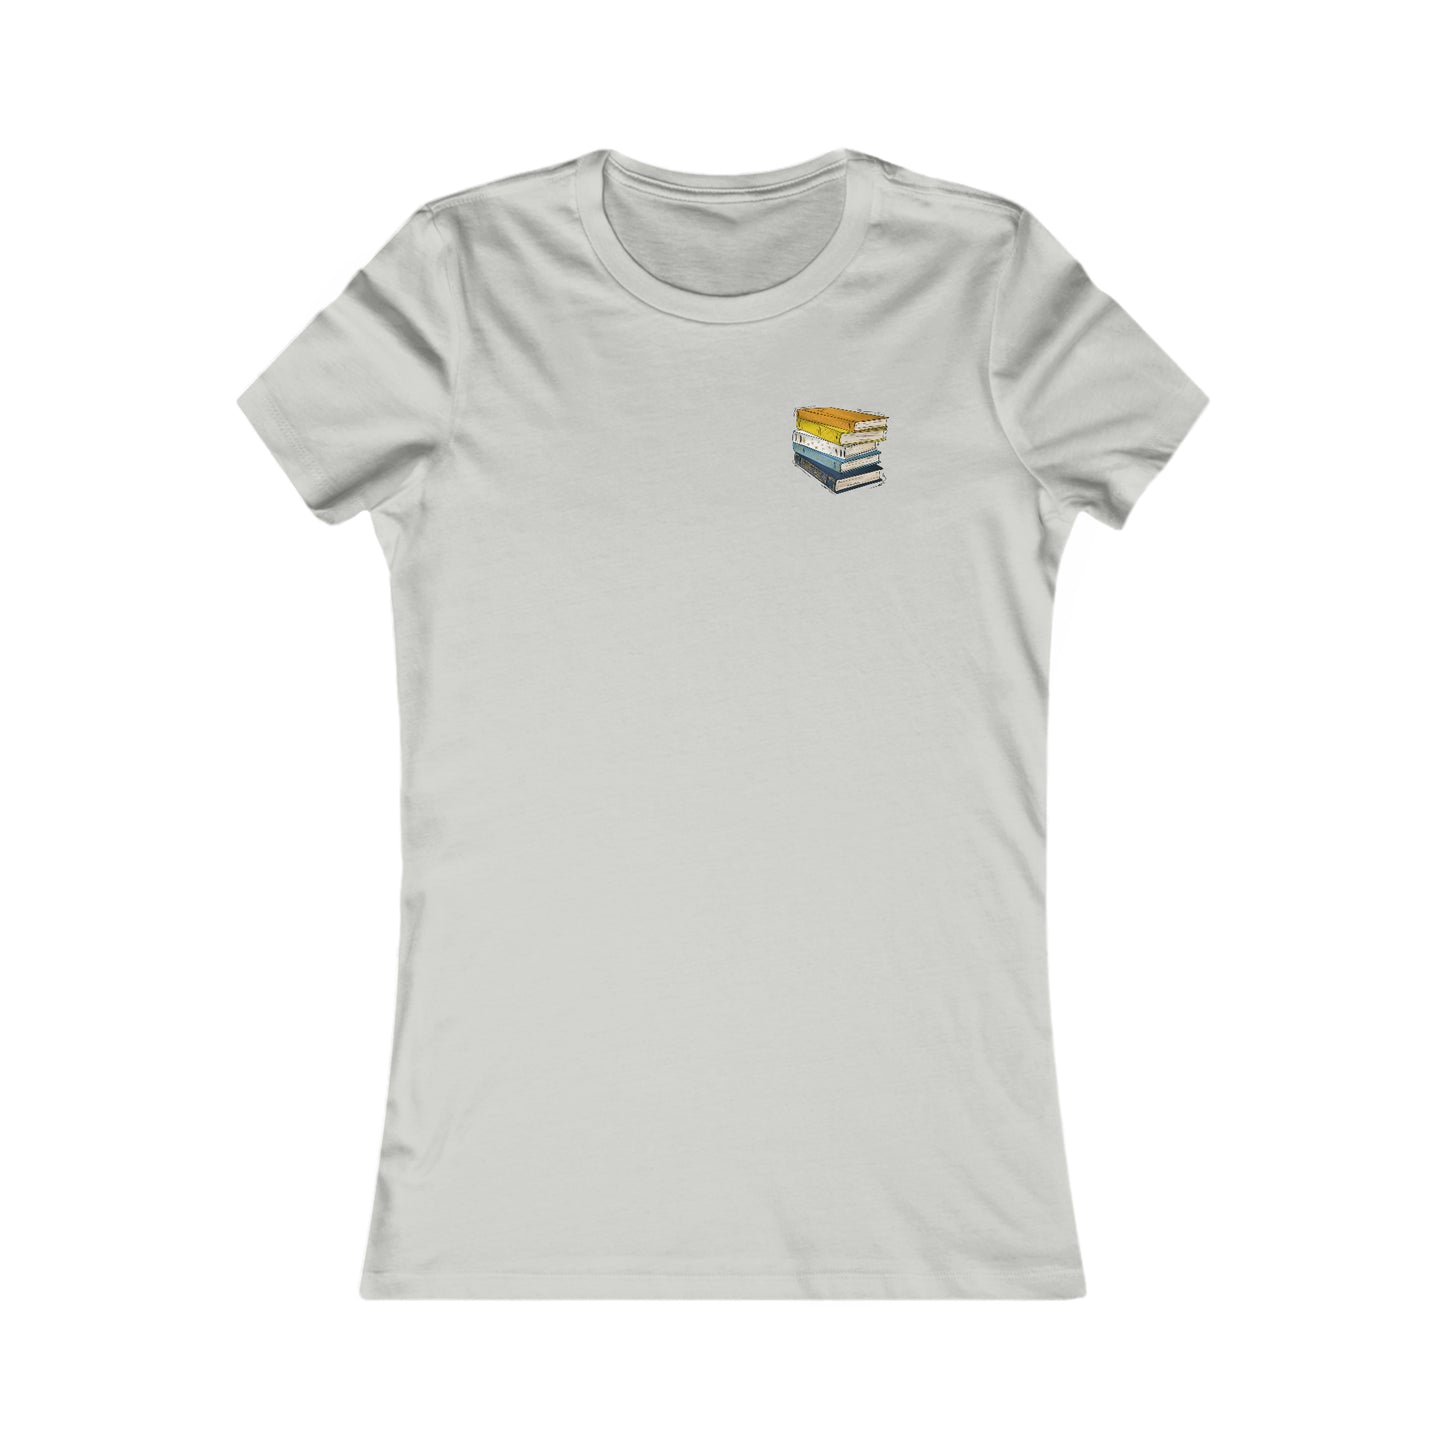 Aroace Pride Flag Old Books - Women's T-Shirt